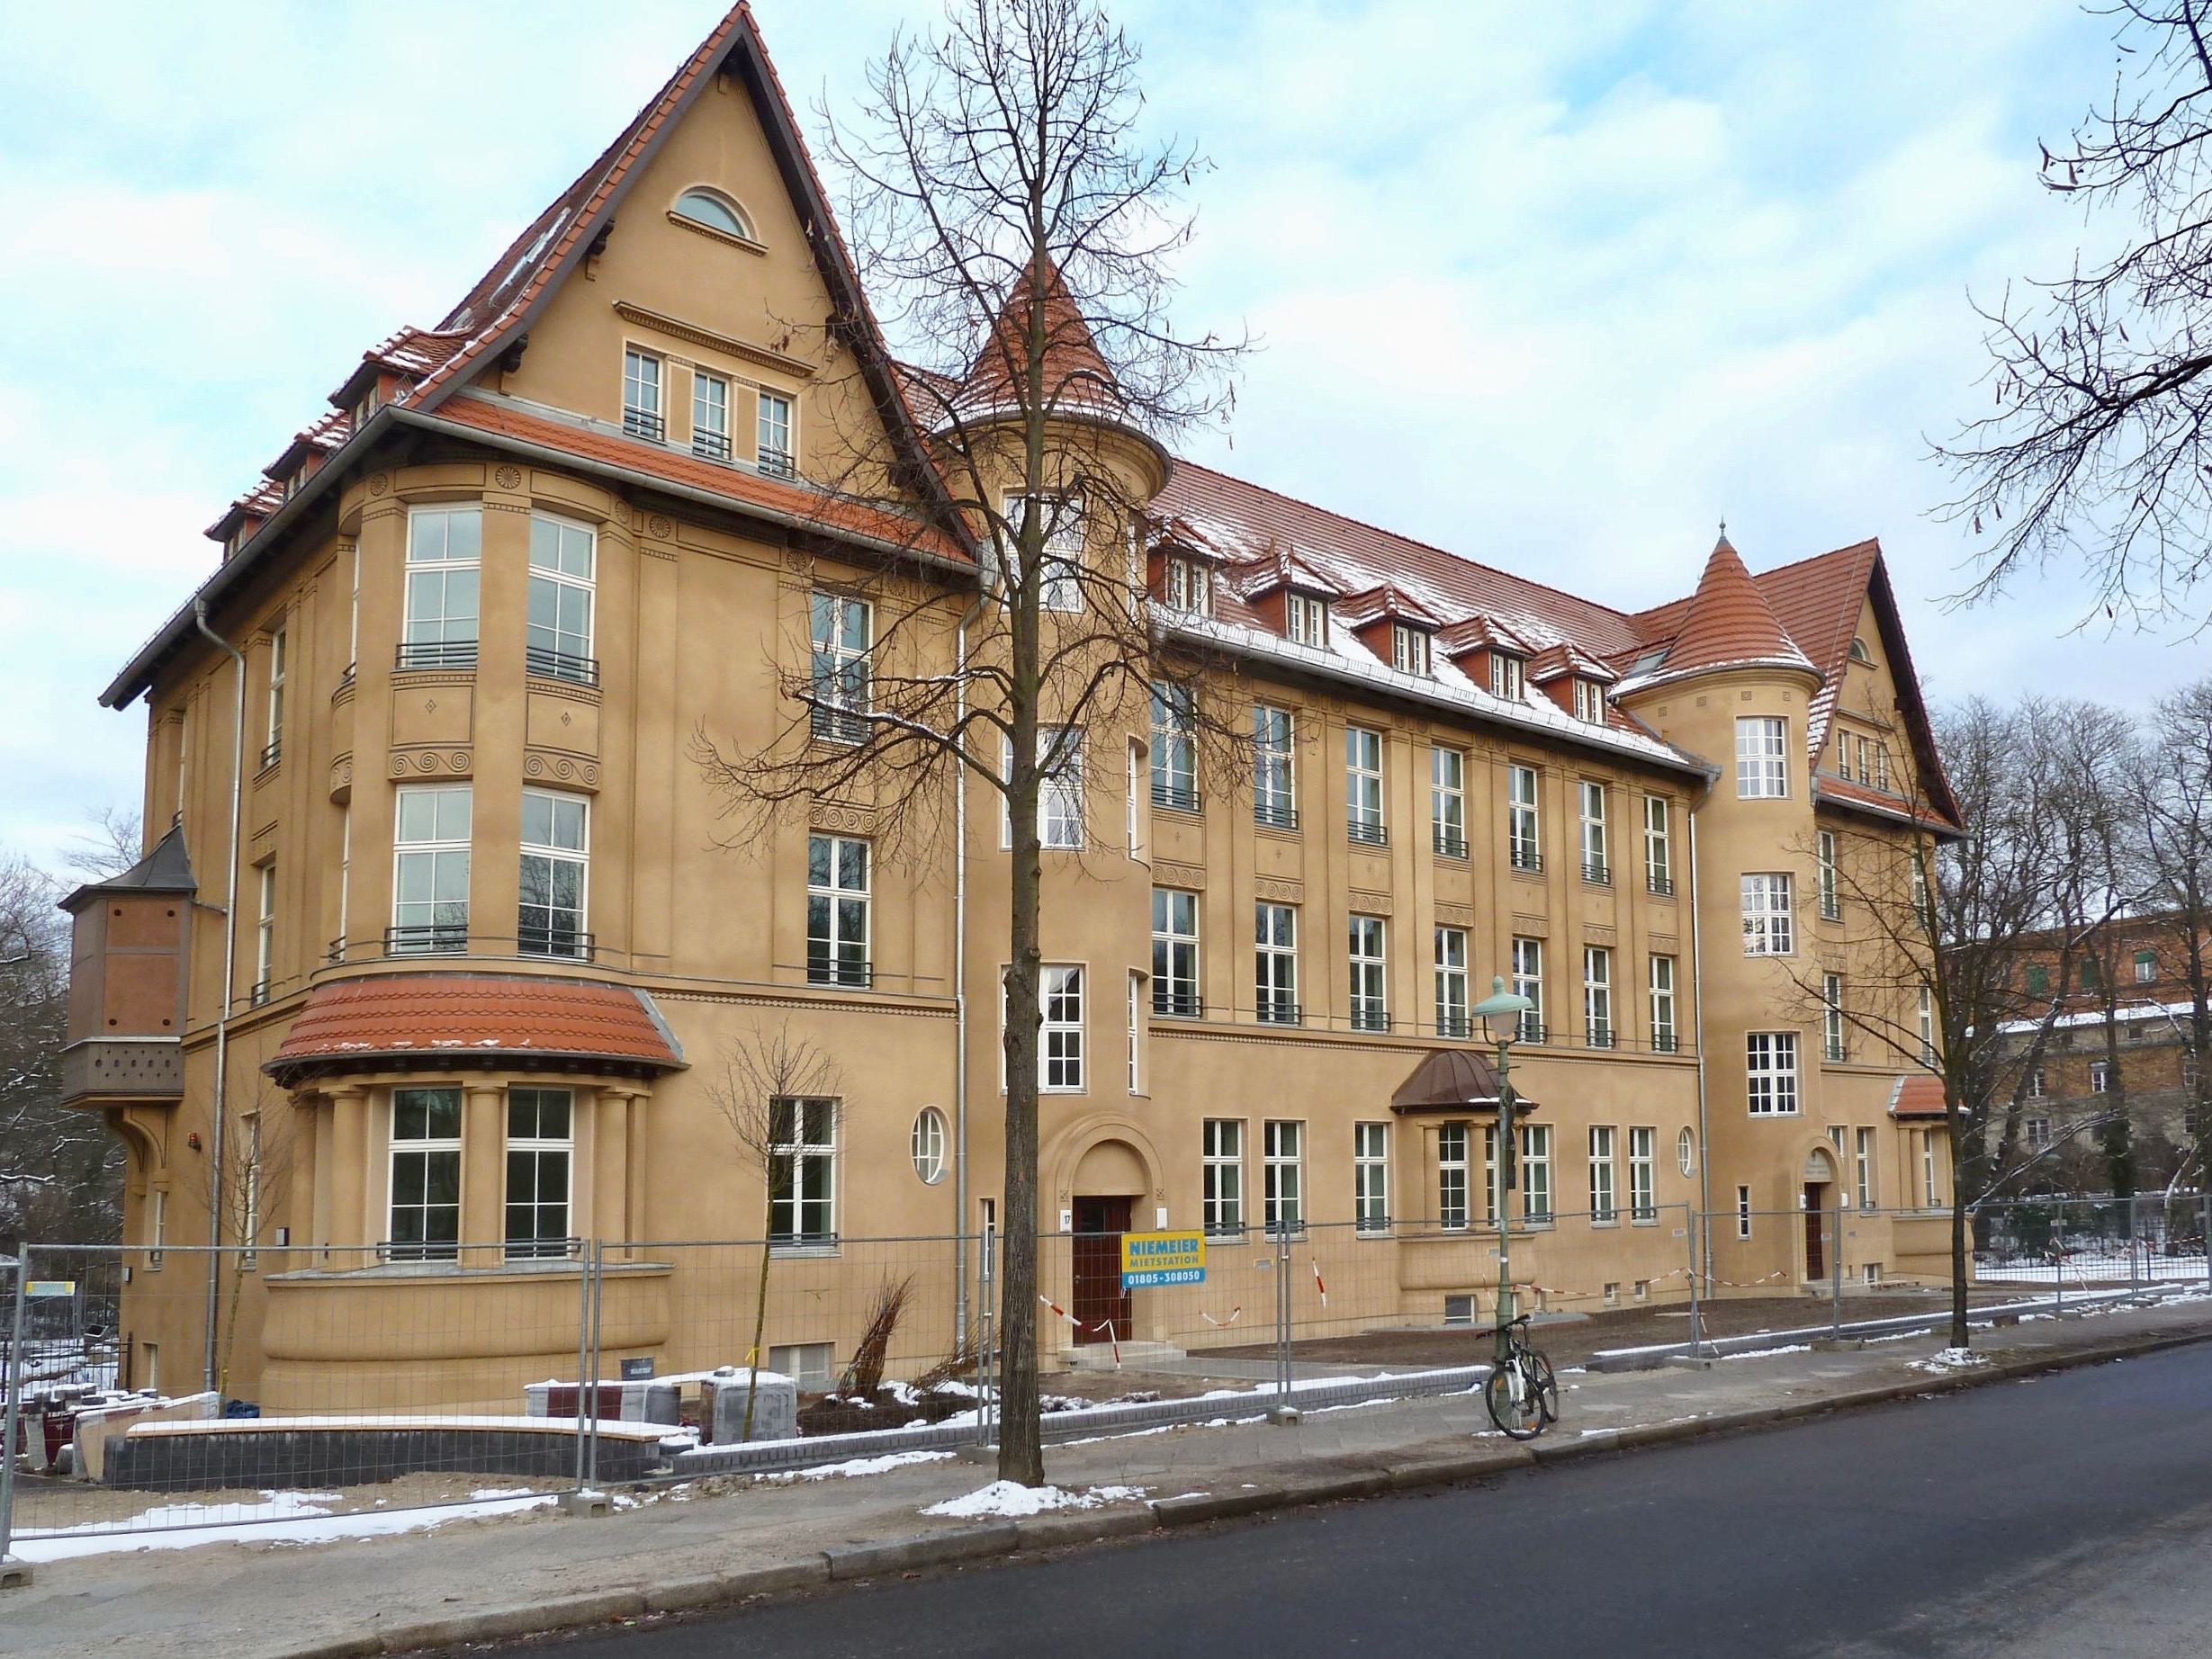 Rothenburgschule, Berlin Steglitz, 2013